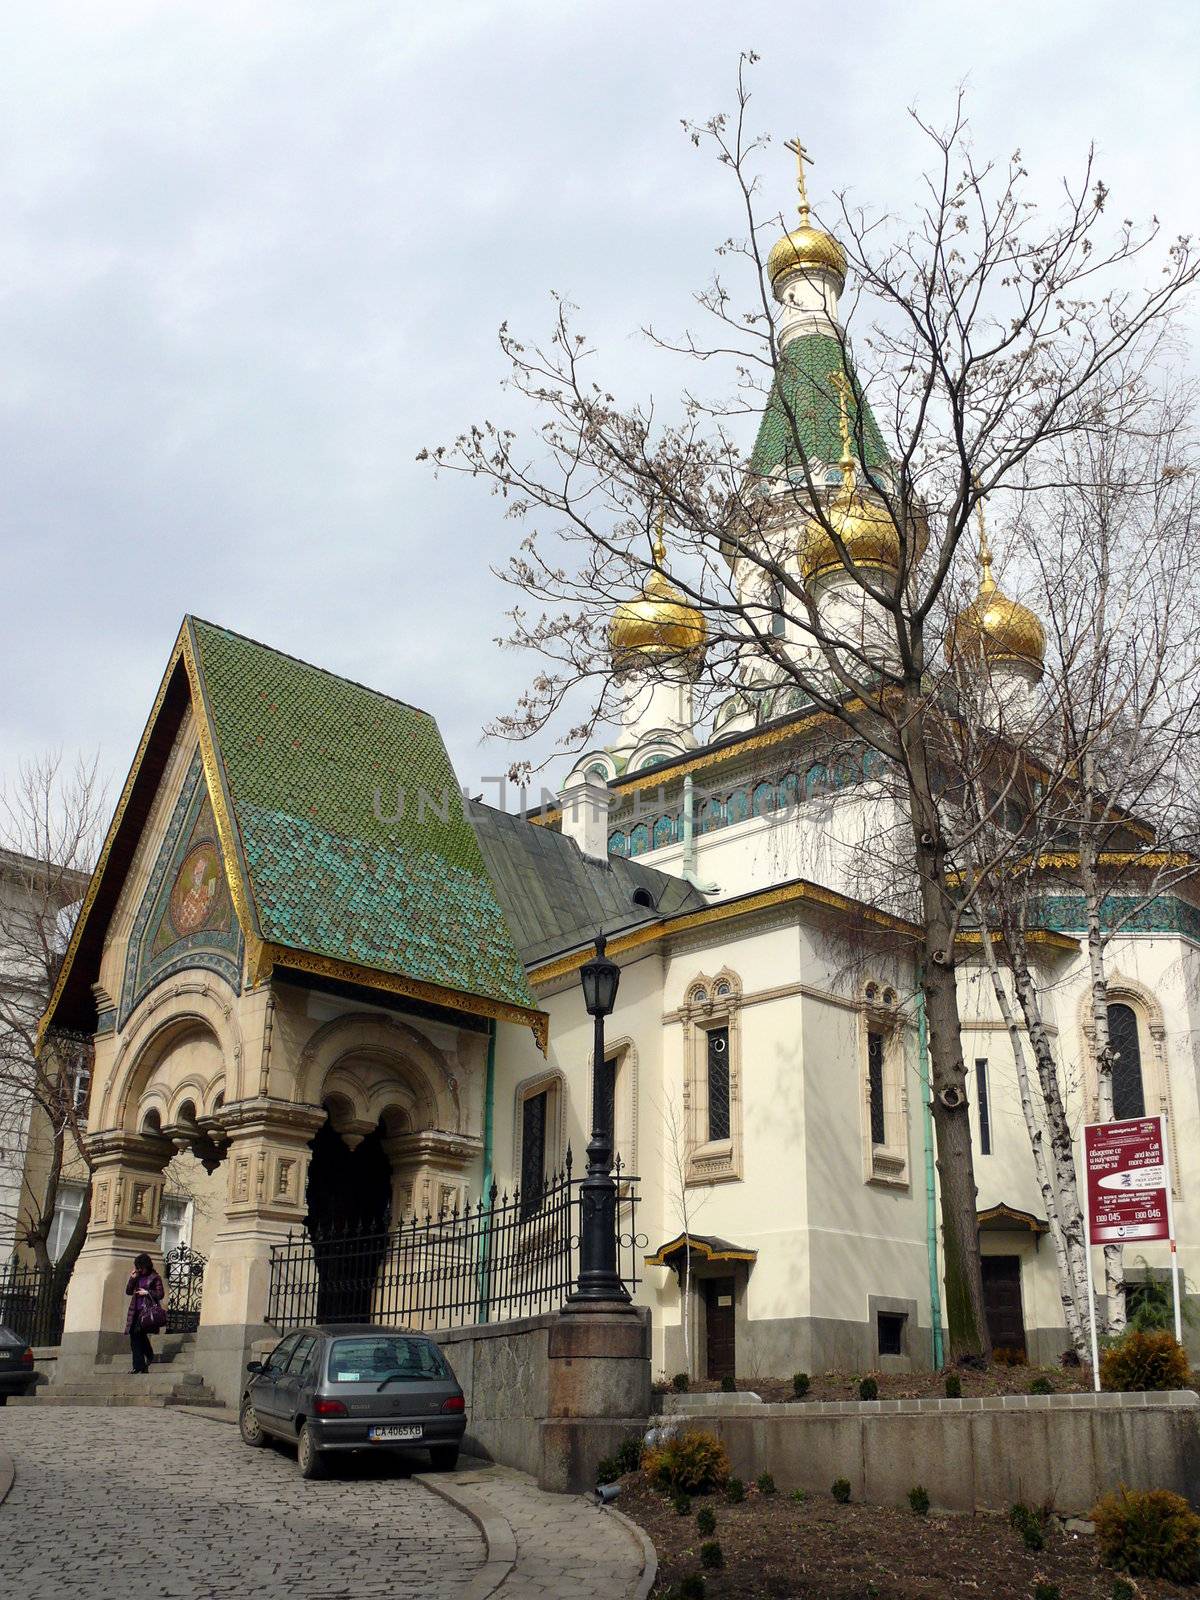 Russian church in Sofia, Bulgaria by Stoyanov